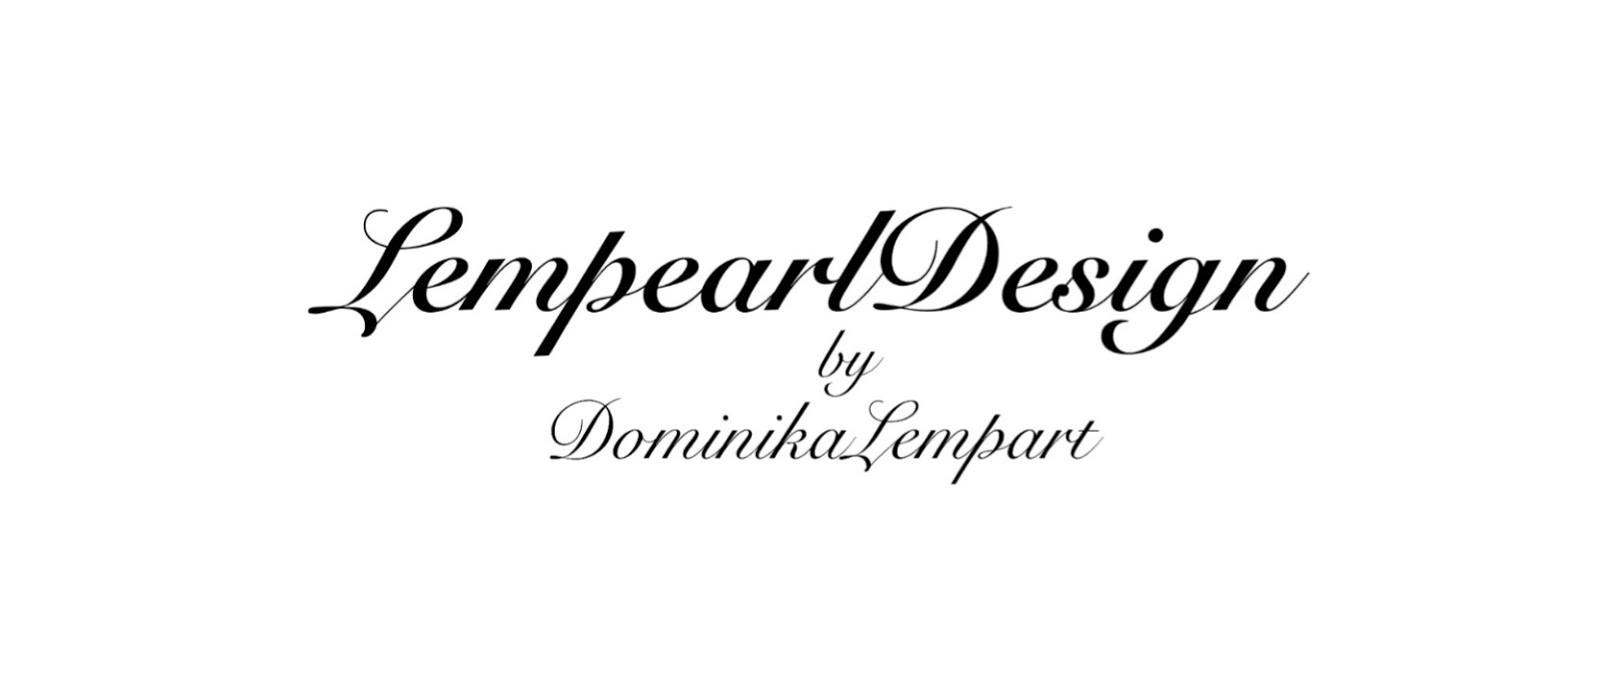 Lempearl Design by Dominika Lempart